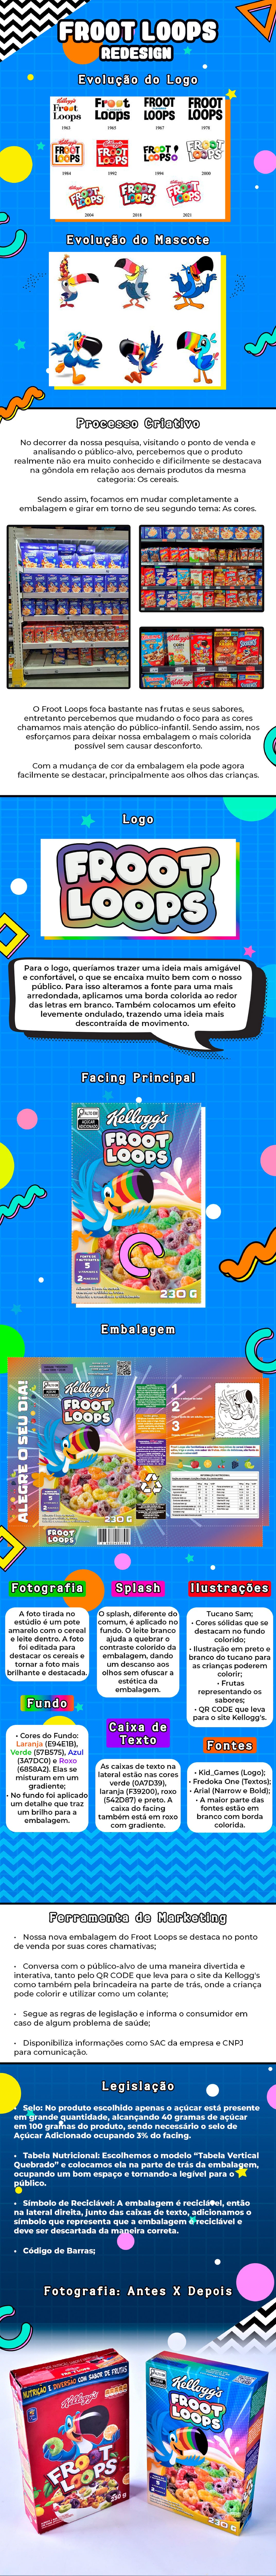 design embalagem redesign Fun impressão Cores design gráfico identidade visual Cereal frootloops